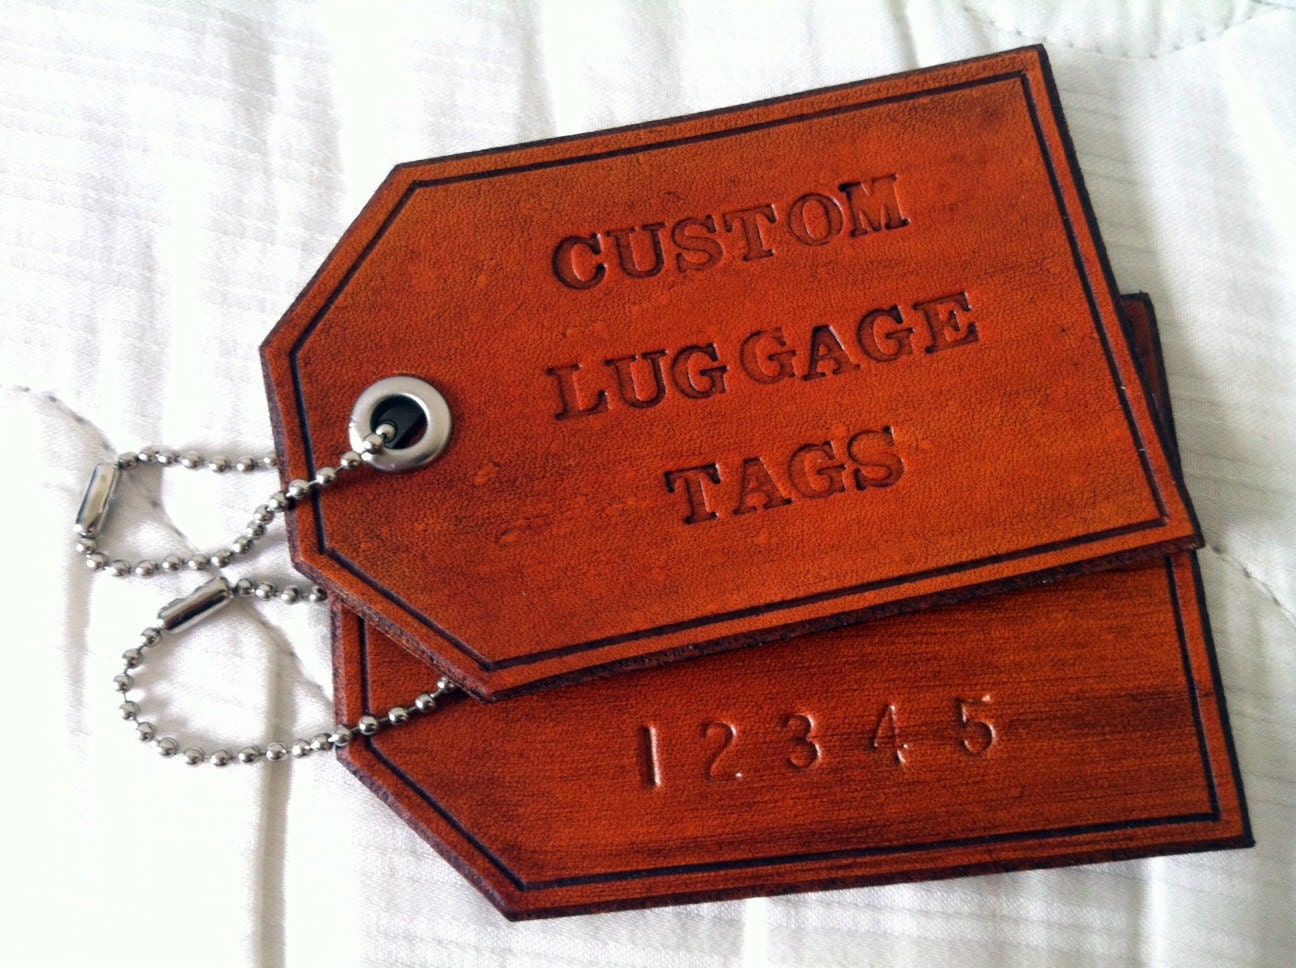 luggage tags target